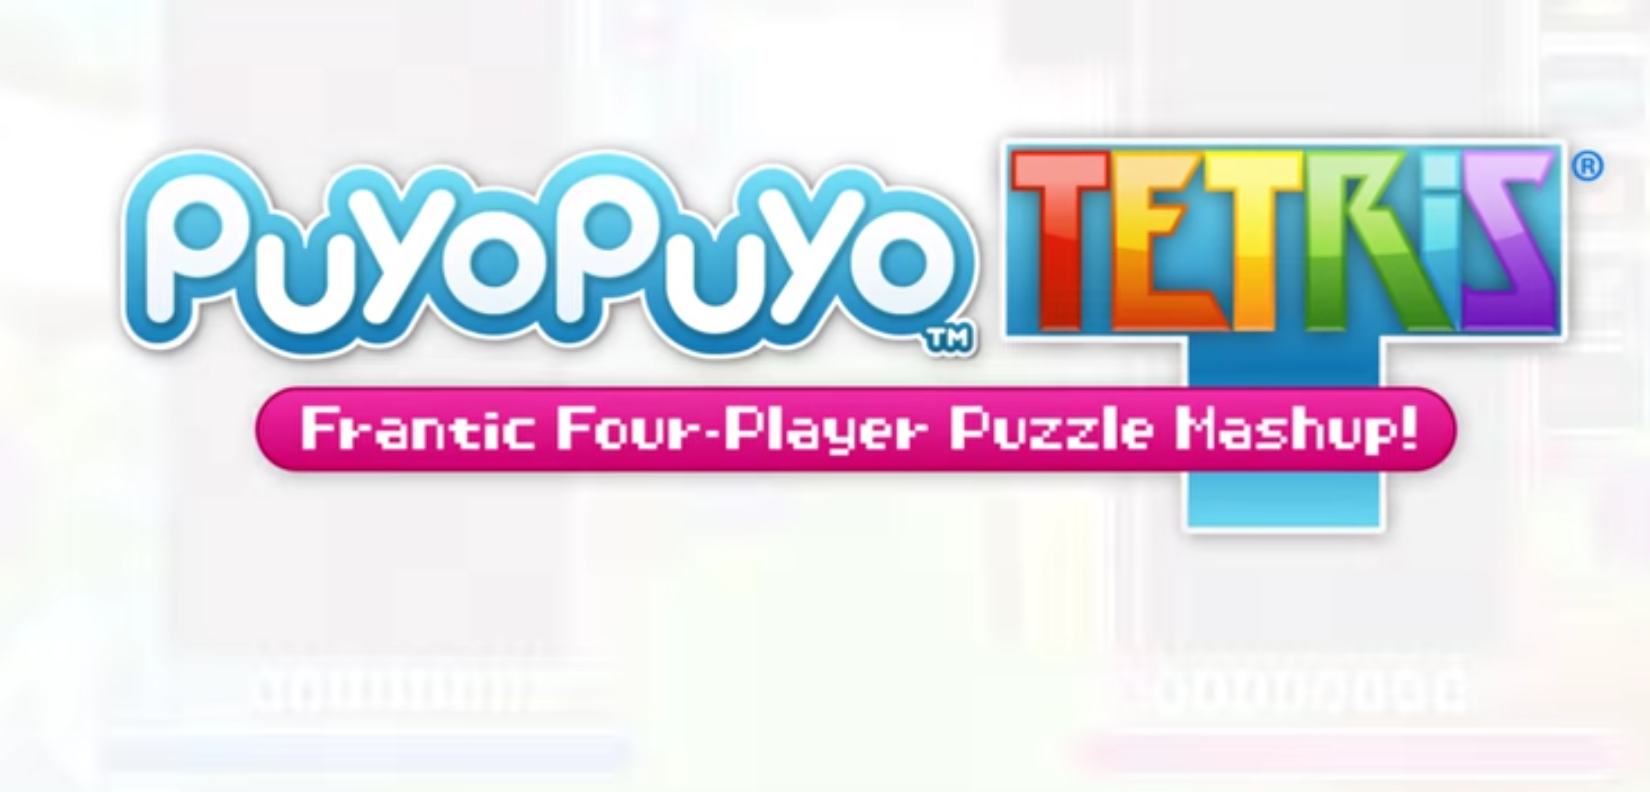 Puyo Puyo Tetris Coming to Nintendo Switch - Rocket Chainsaw